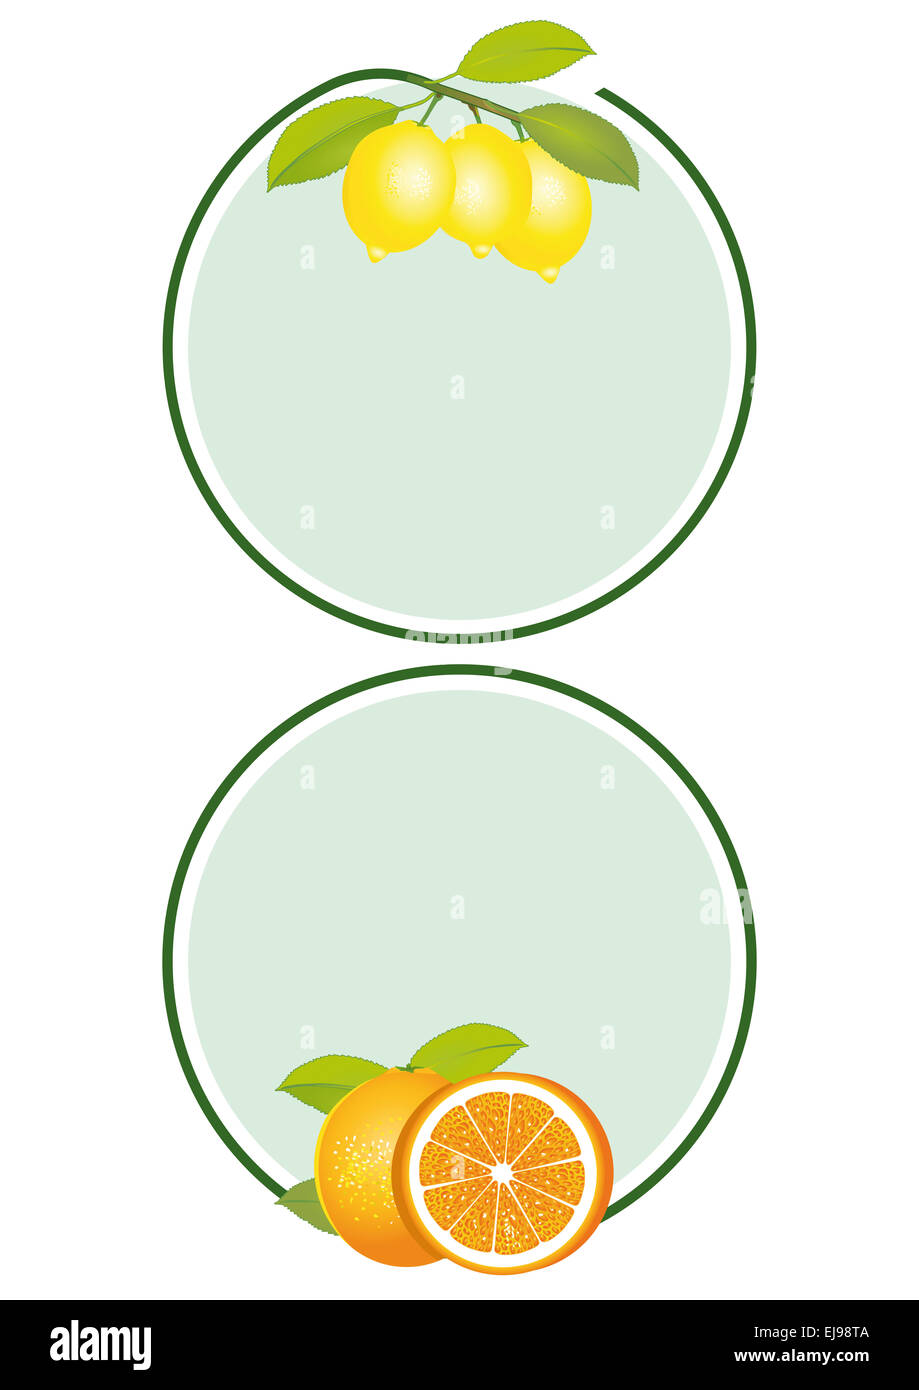 Lemons Oranges Label Stock Photo